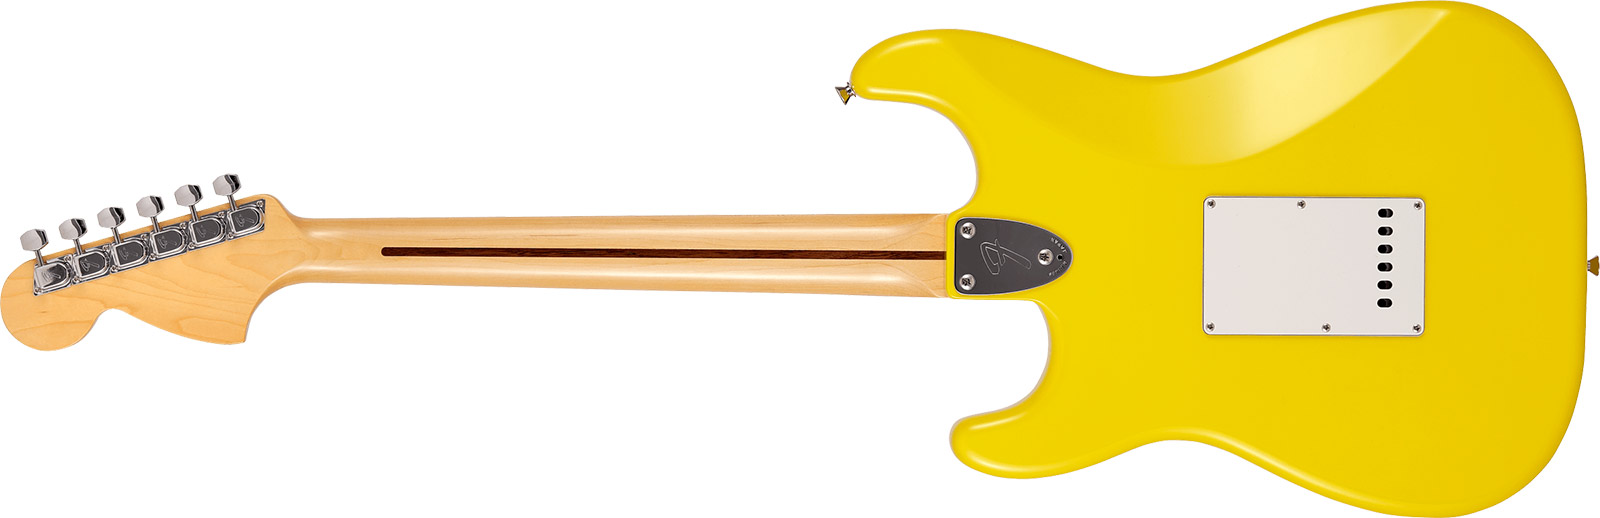 Fender Strat International Color Ltd Jap 3s Trem Mn - Monaco Yellow - Elektrische gitaar in Str-vorm - Variation 1